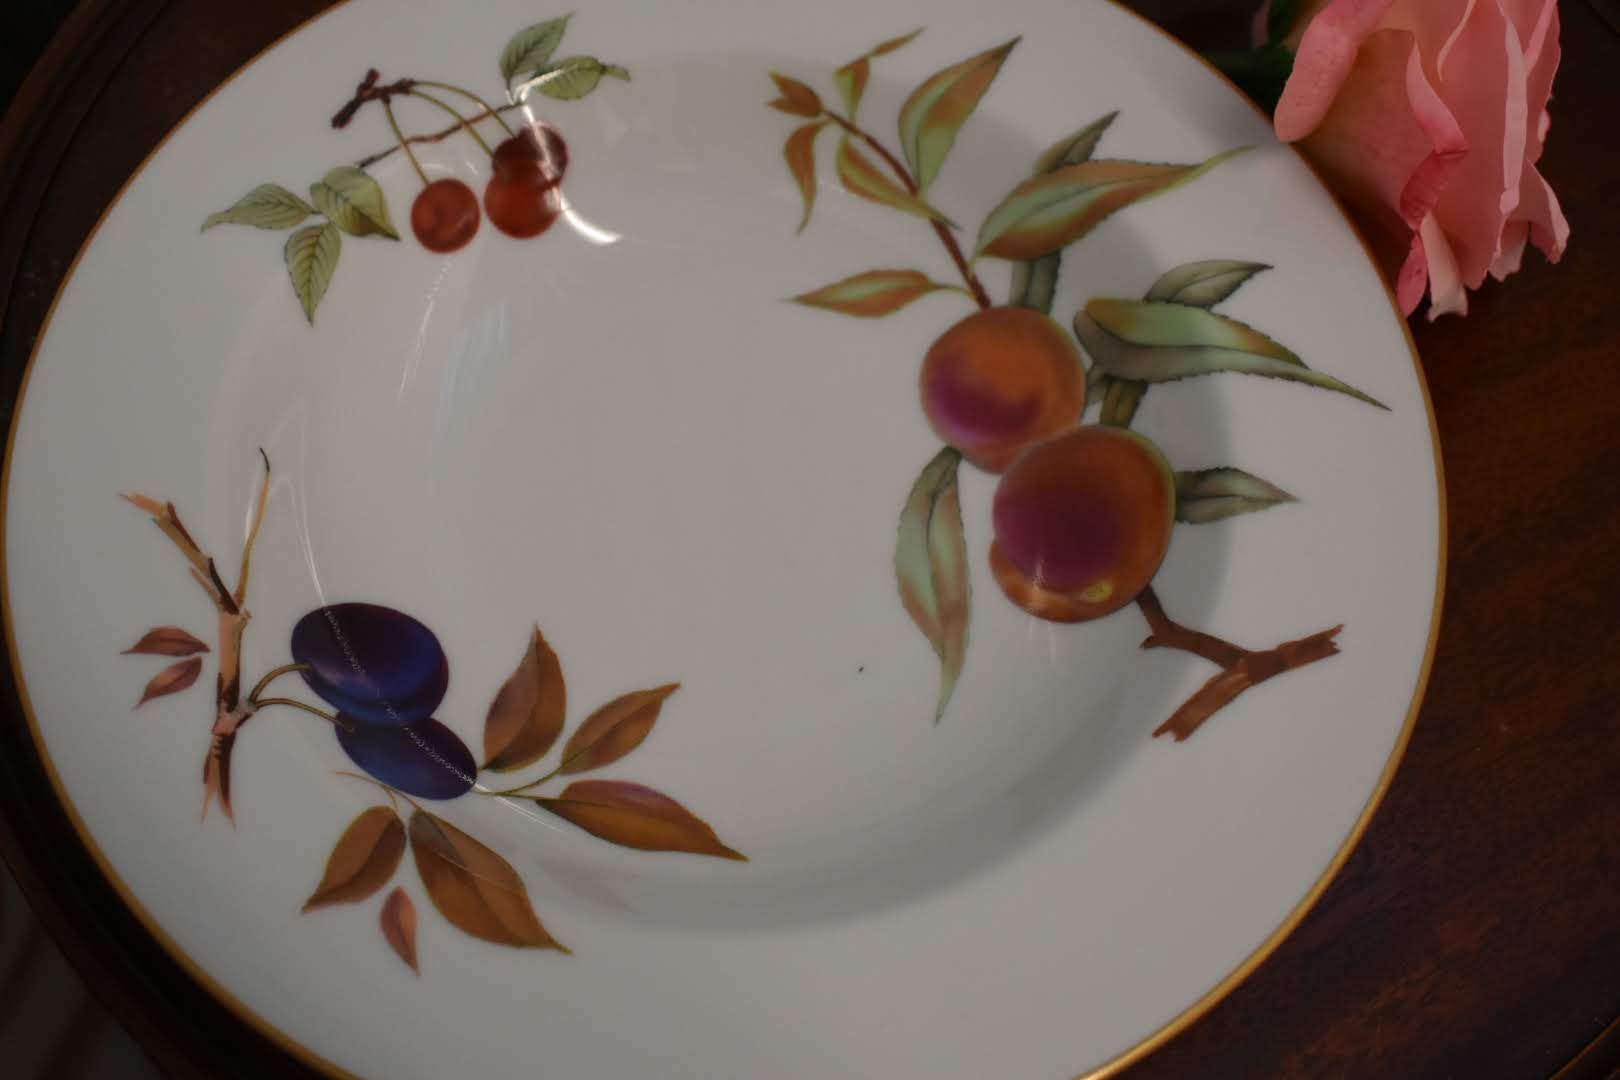 Royal Worchester Evesham - Fine Porcelain China - Vegetable Bowl - Gold Trim - From England